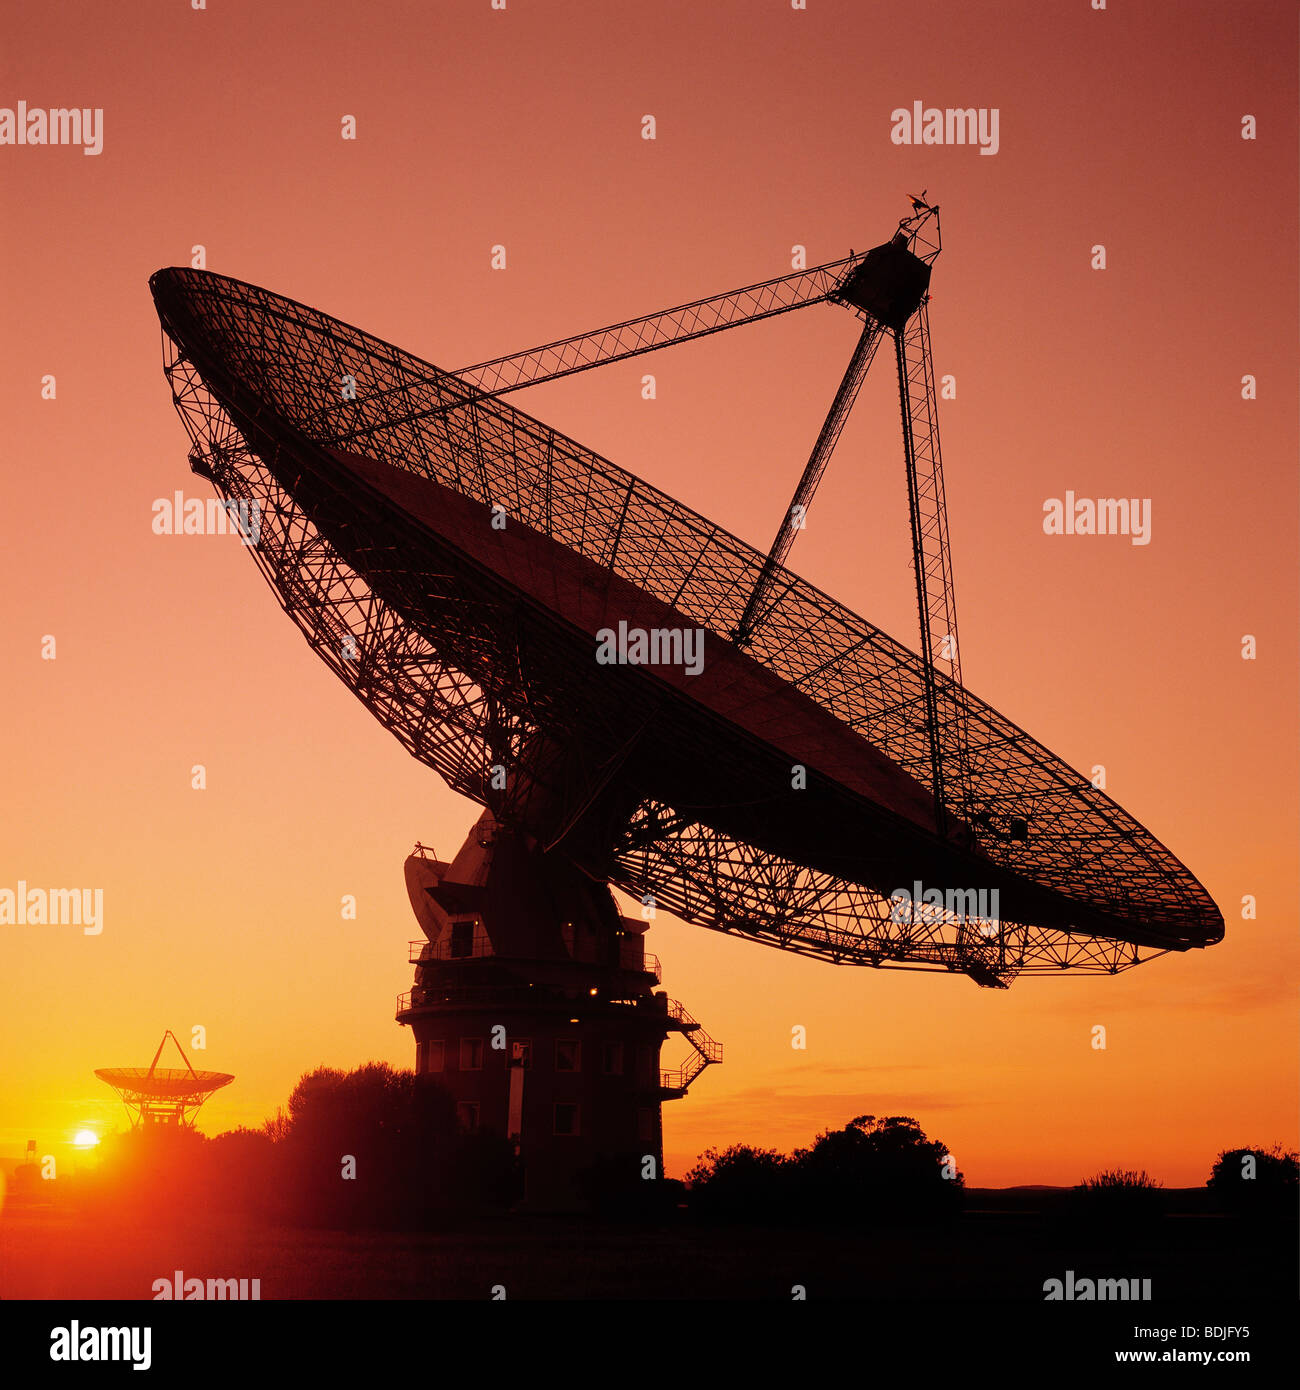 Radio Telescope, Satellite Receiving Dish, Sunset Silhouette Stock Photo